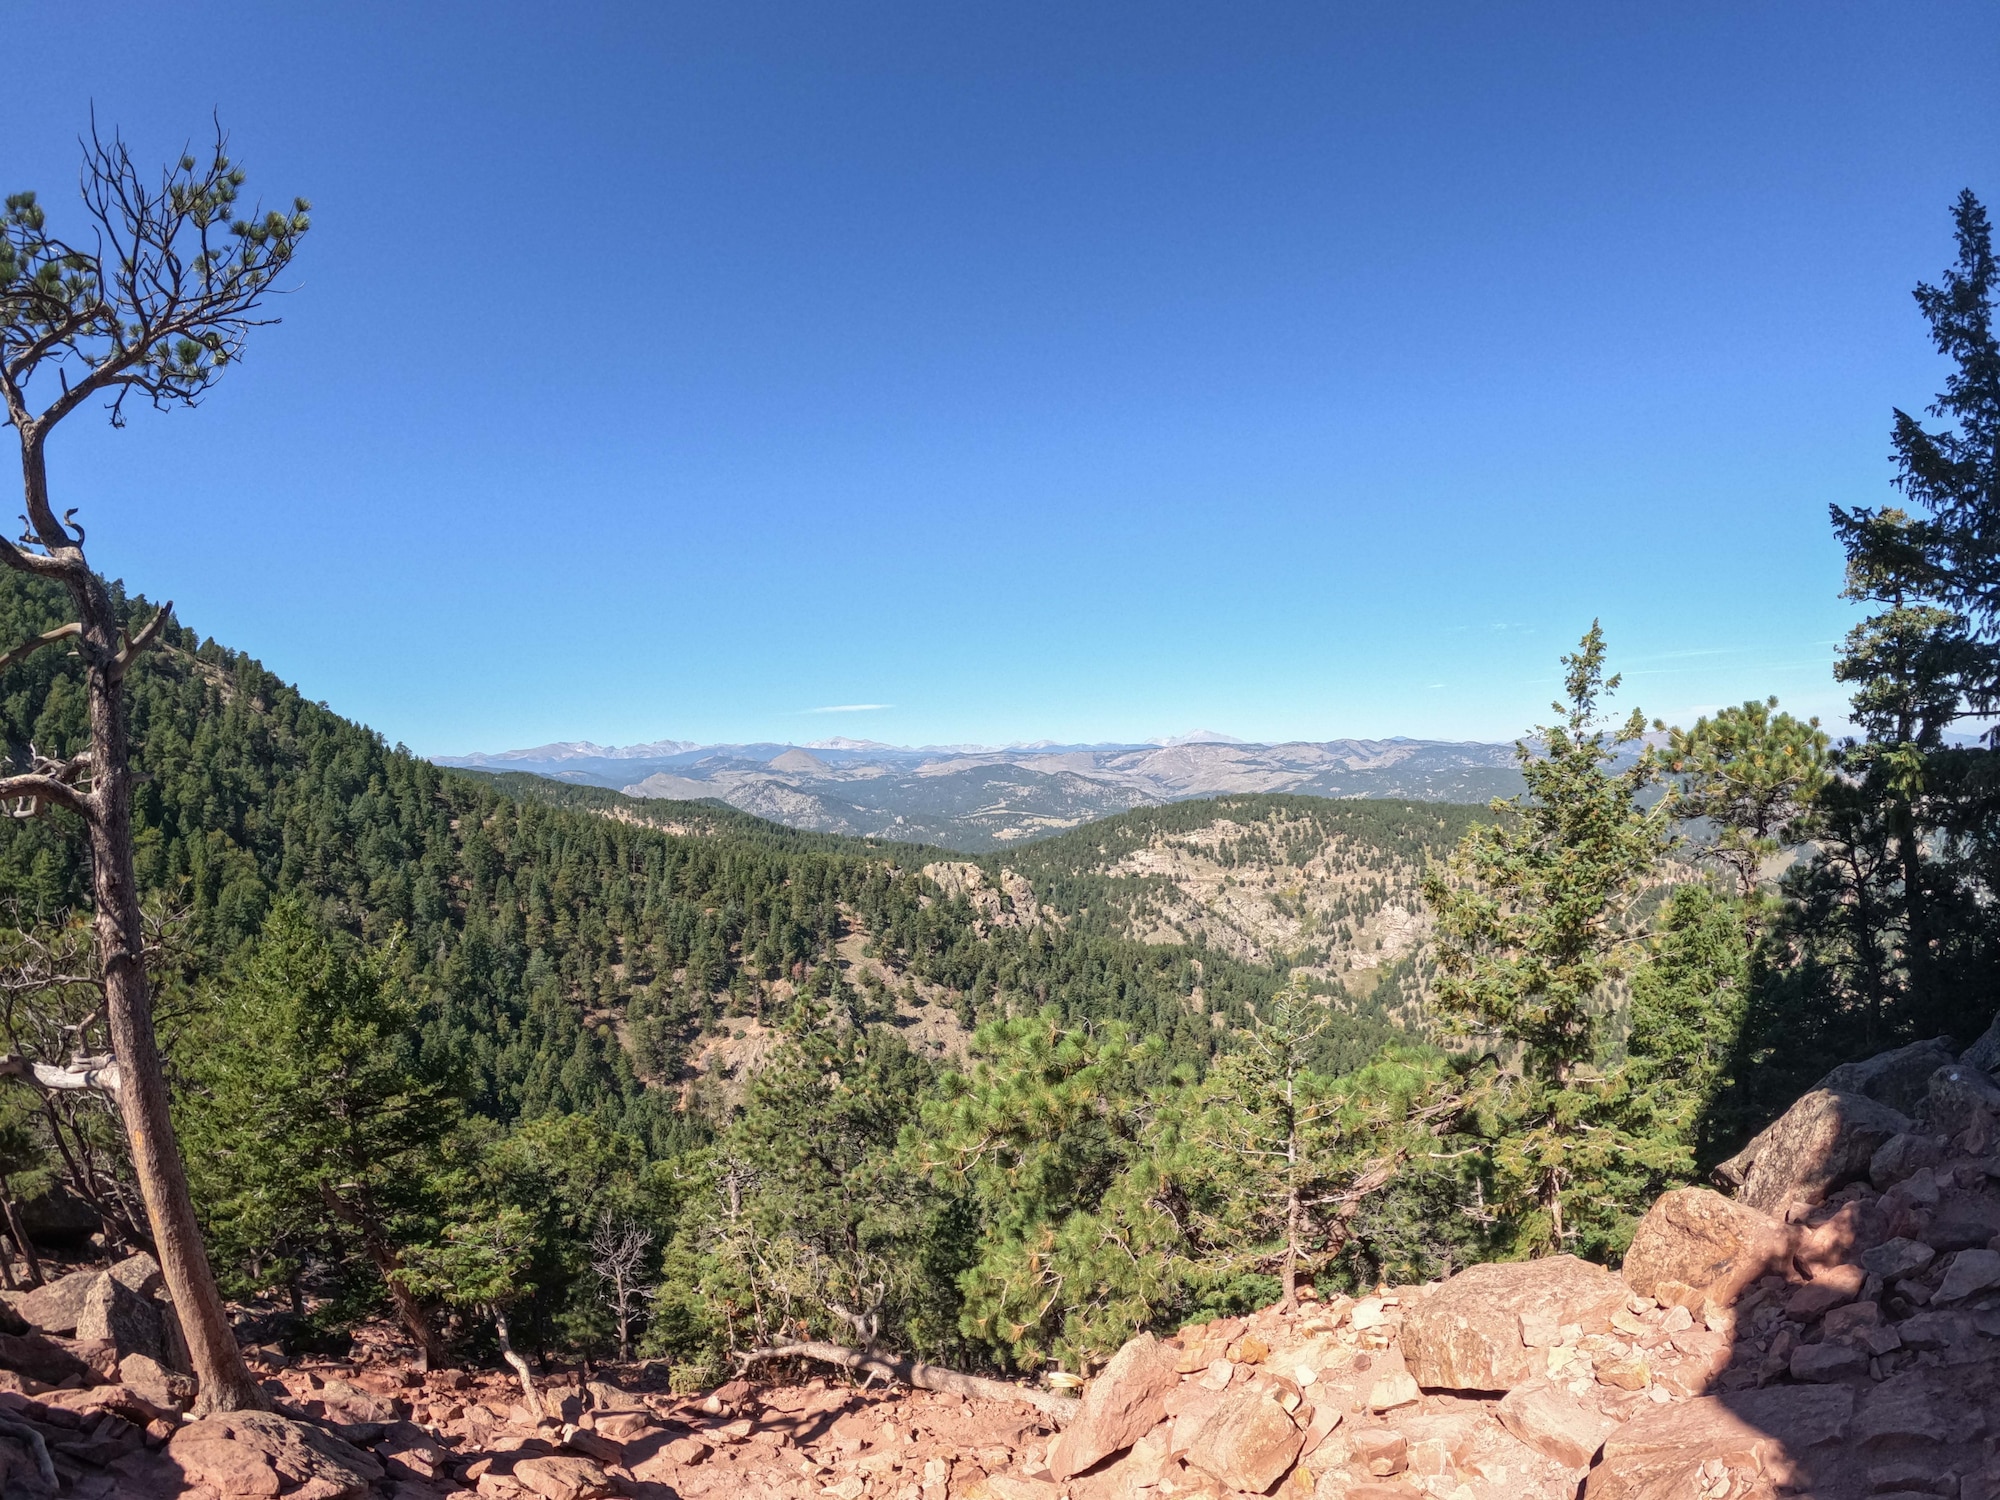 The Boulder Flatirons hiking trail